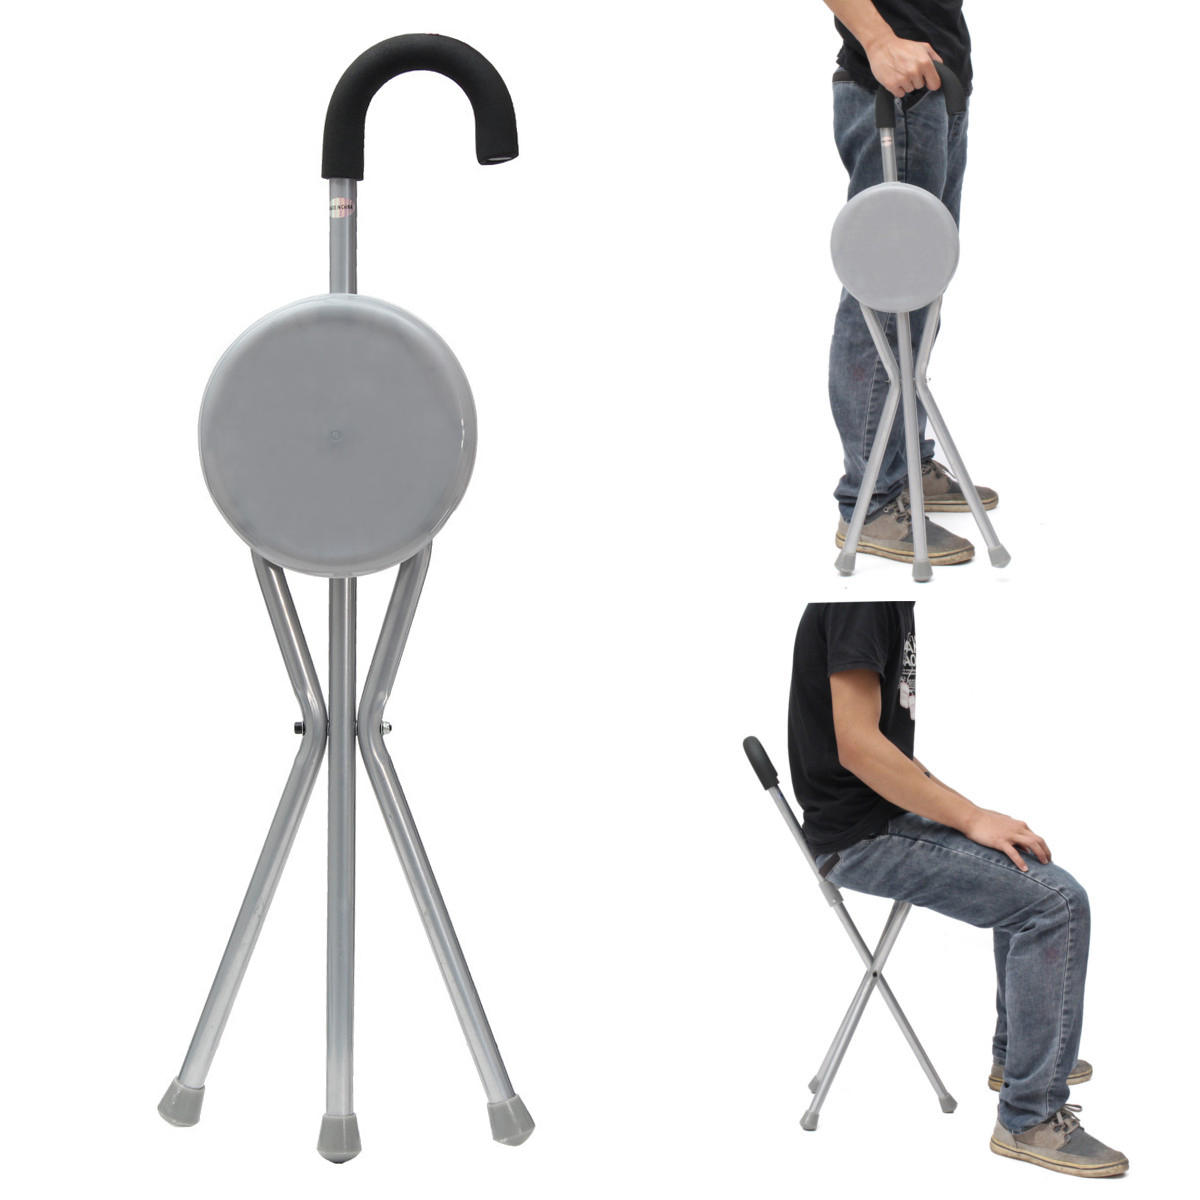 Outdoor Travel Folding Stool Chair Portable Tripod Cane Walking Stick Seat Camping Hiking